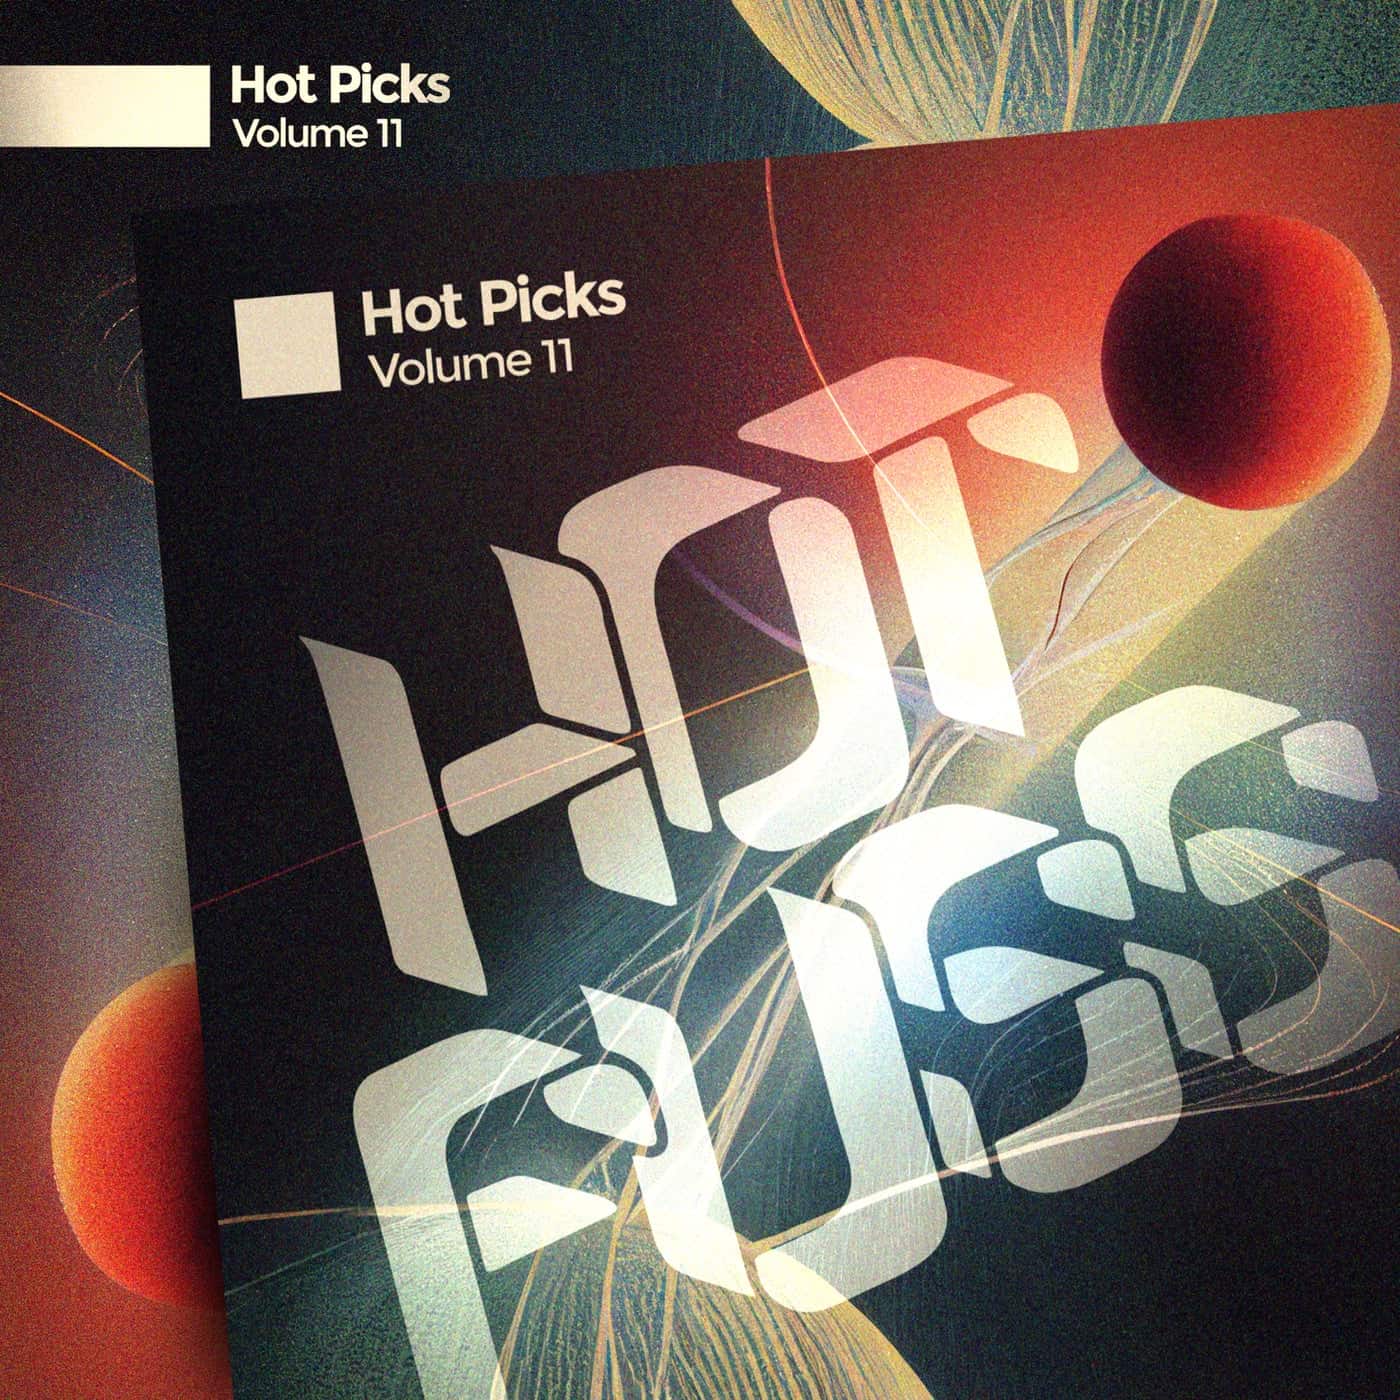 Download Hurm, Andre Salmon, K-Mack, Aker, Alex Lauthals, Alonso - Hot Picks Vol.11 on Electrobuzz